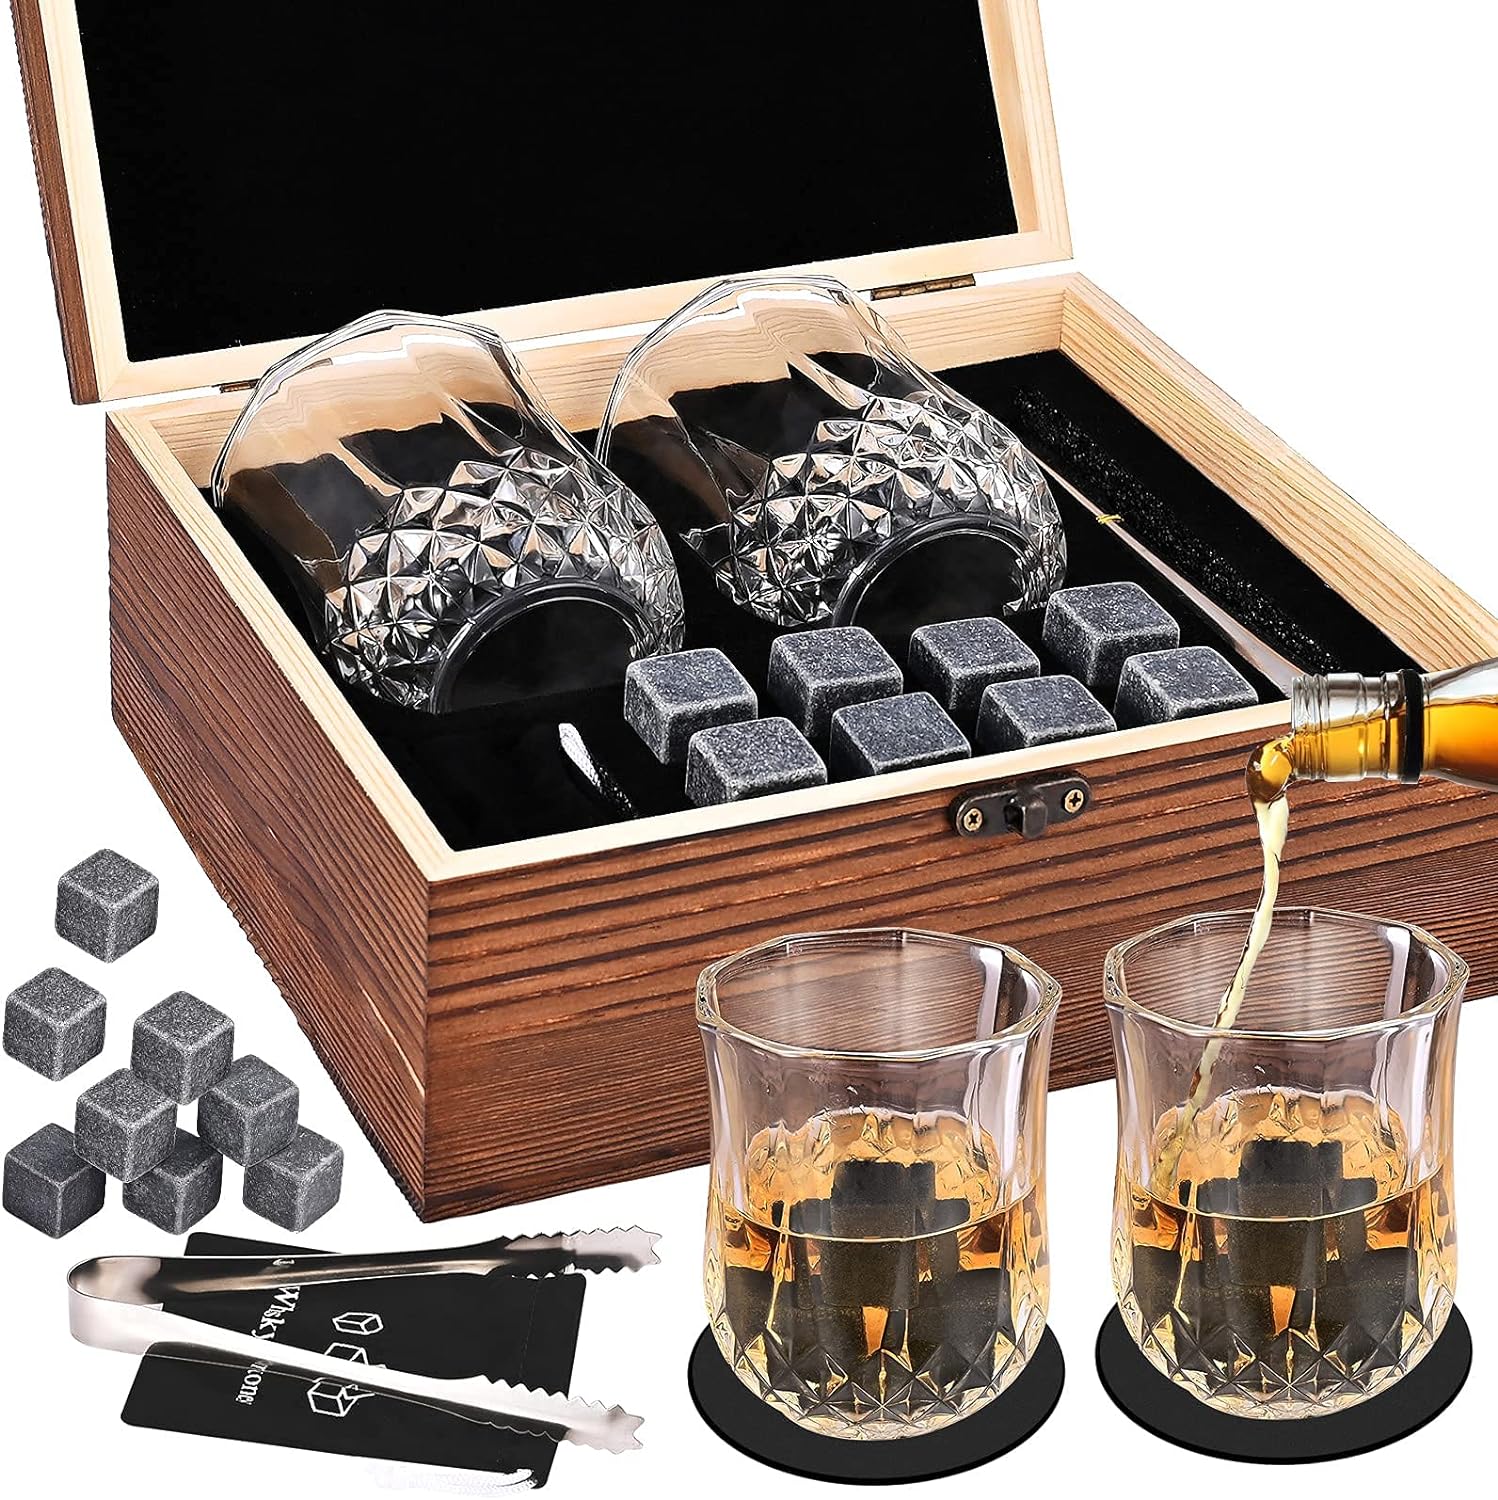 whisky stones set